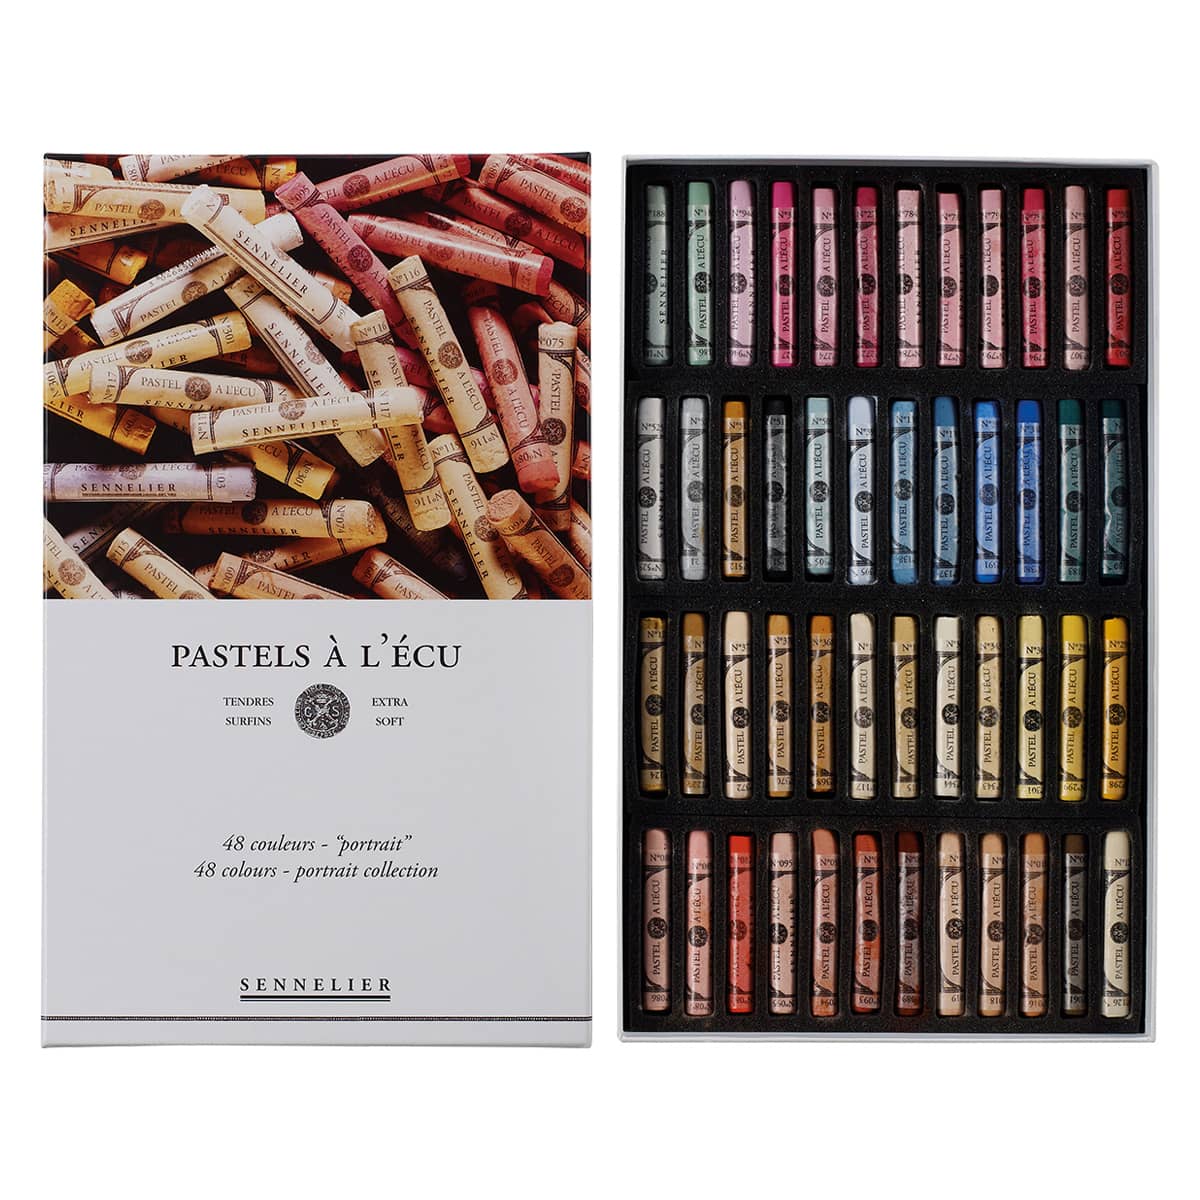 Sennelier Extra Soft Pastel Cardboard Box Set of 48 - Portrait Colors